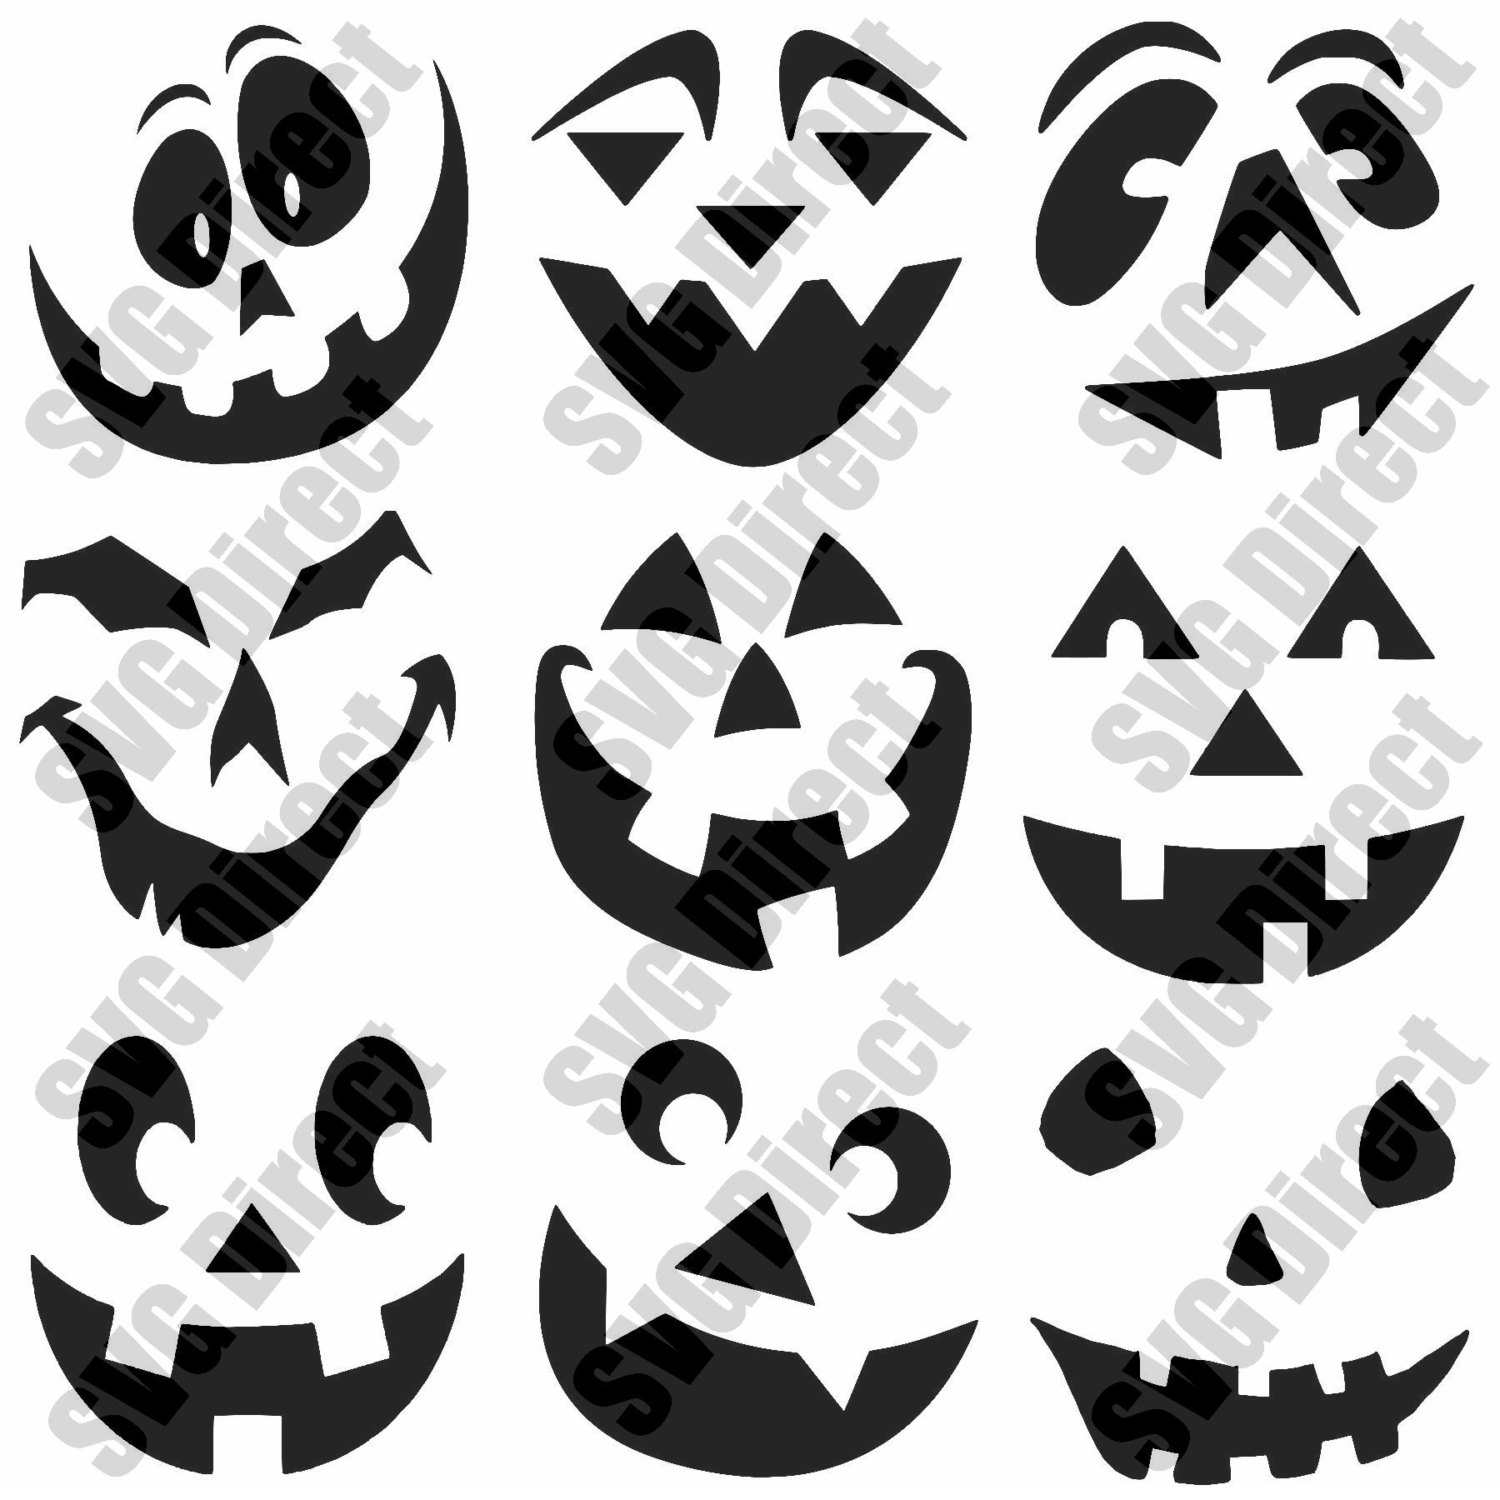 Download 9 Halloween Pumpkin Smiling Face Decal Designs SVG cut ...